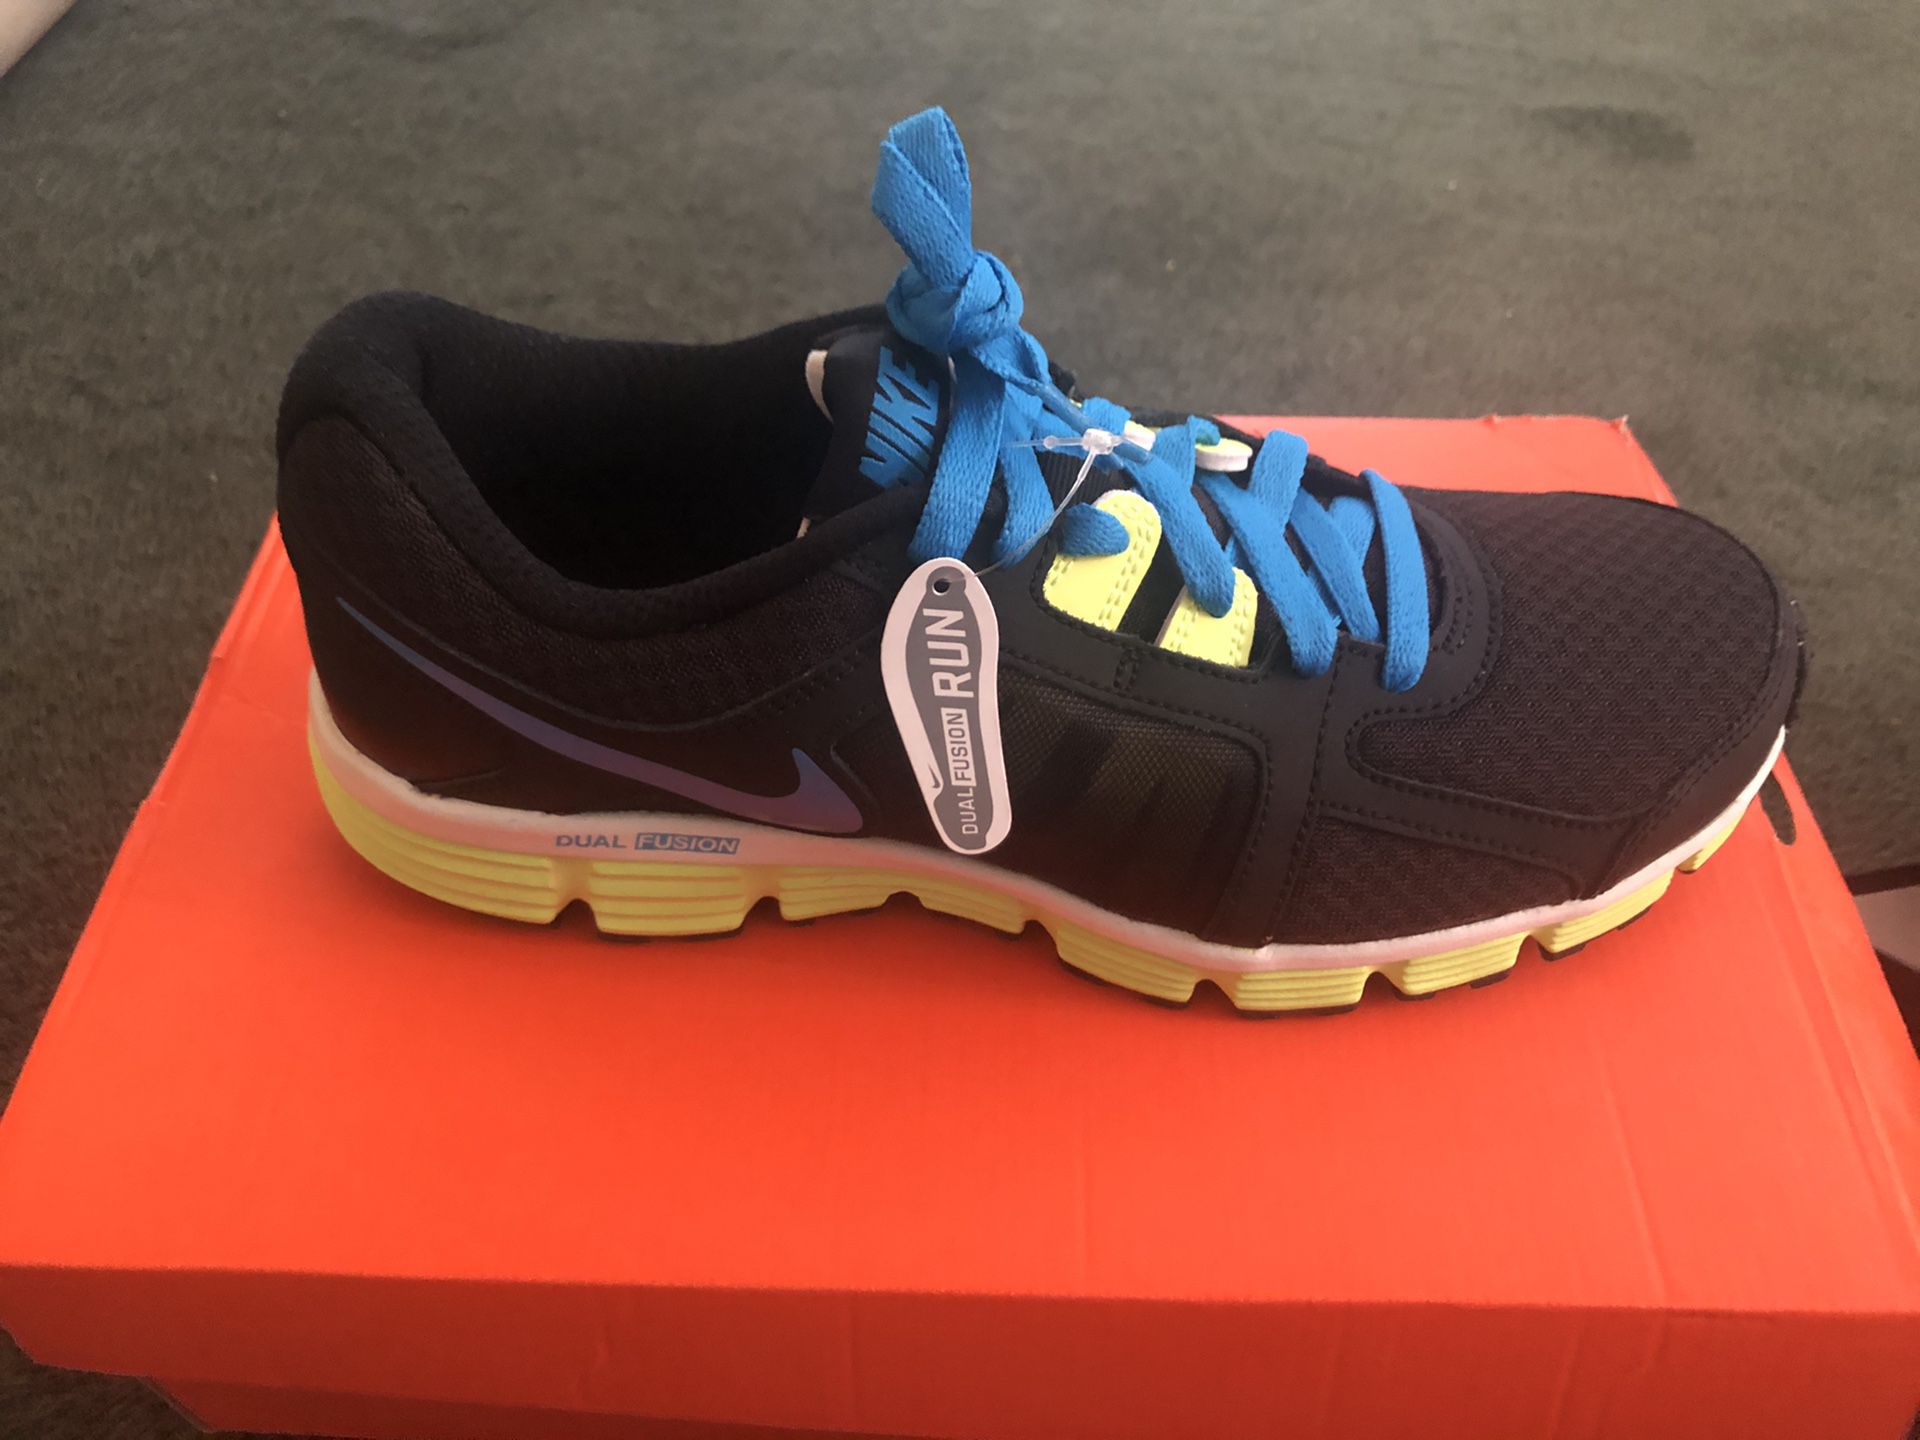 Nike women’s running shoes- New!